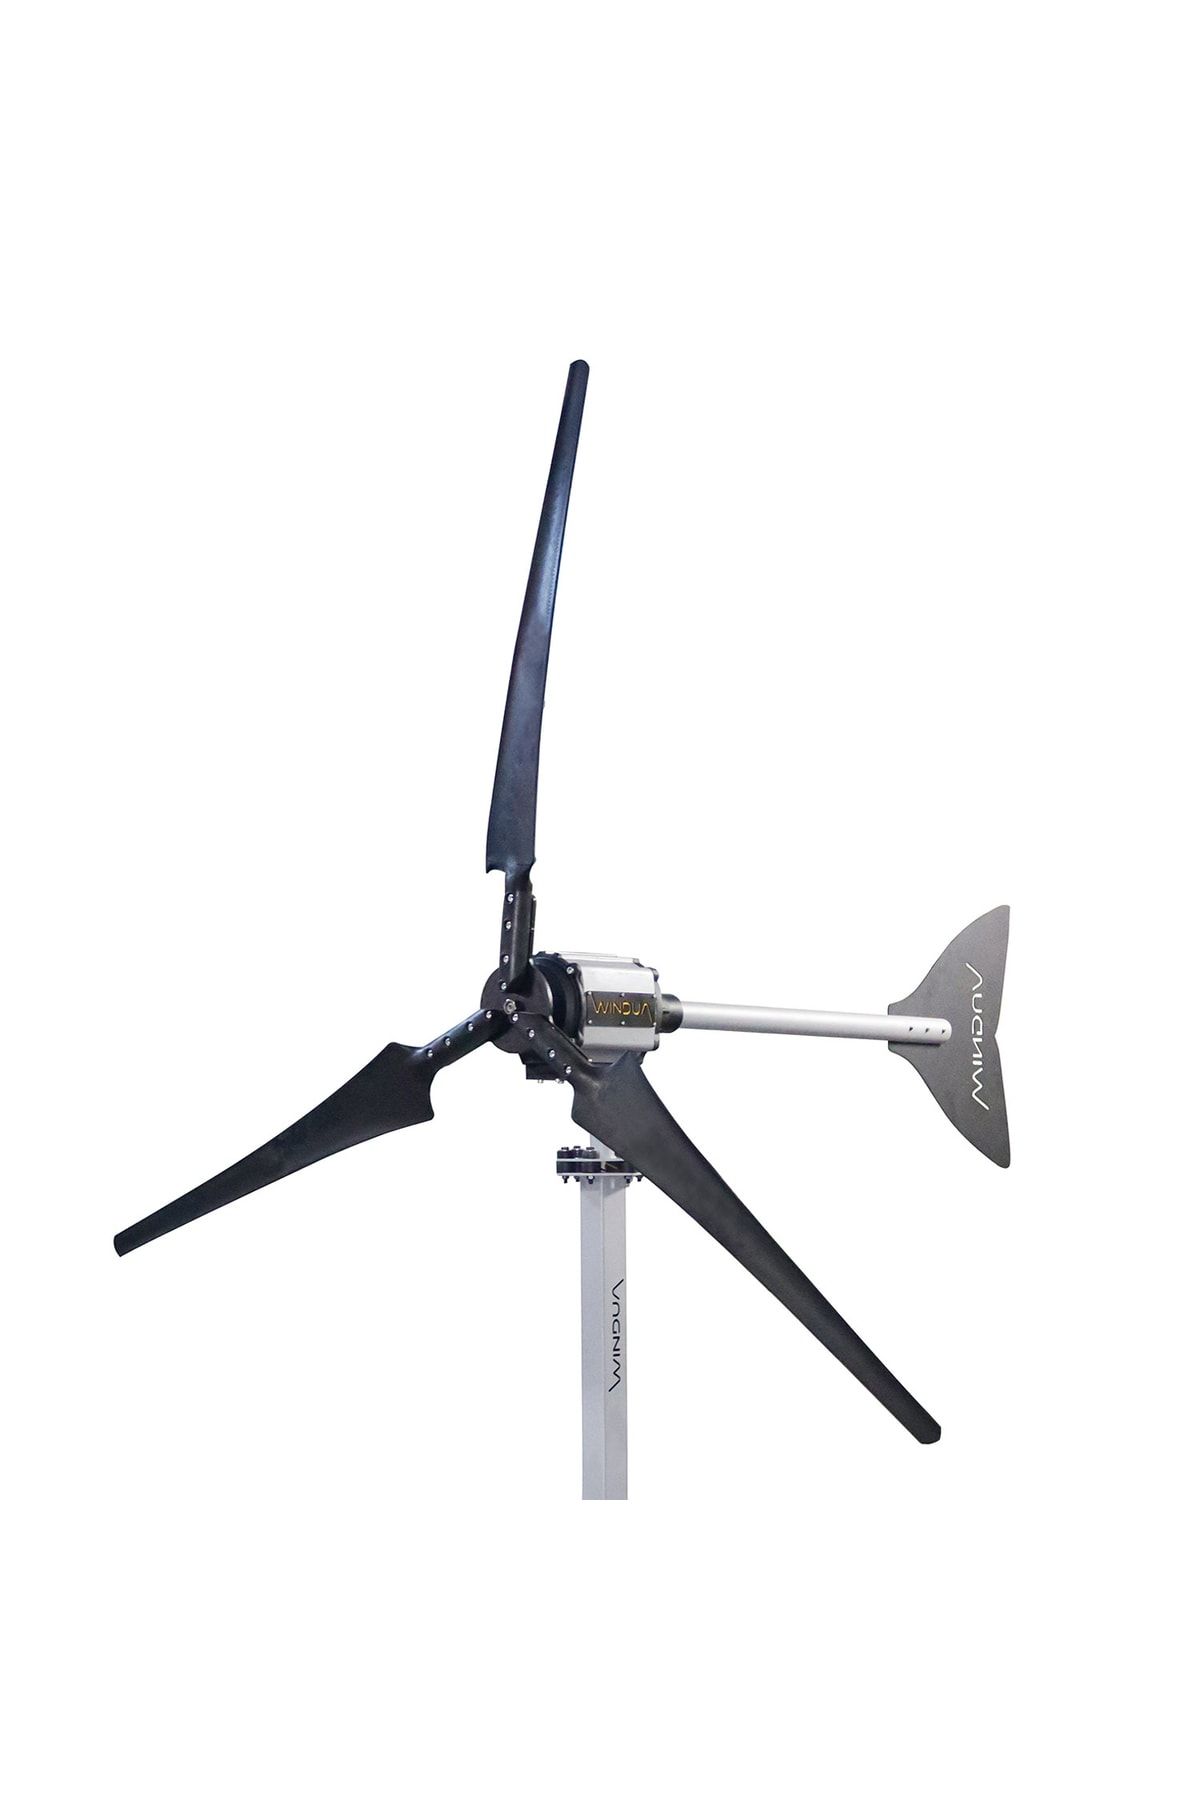 Windua Yatay Eksenli Rüzgar Türbini (1 KW) 1000 Watt